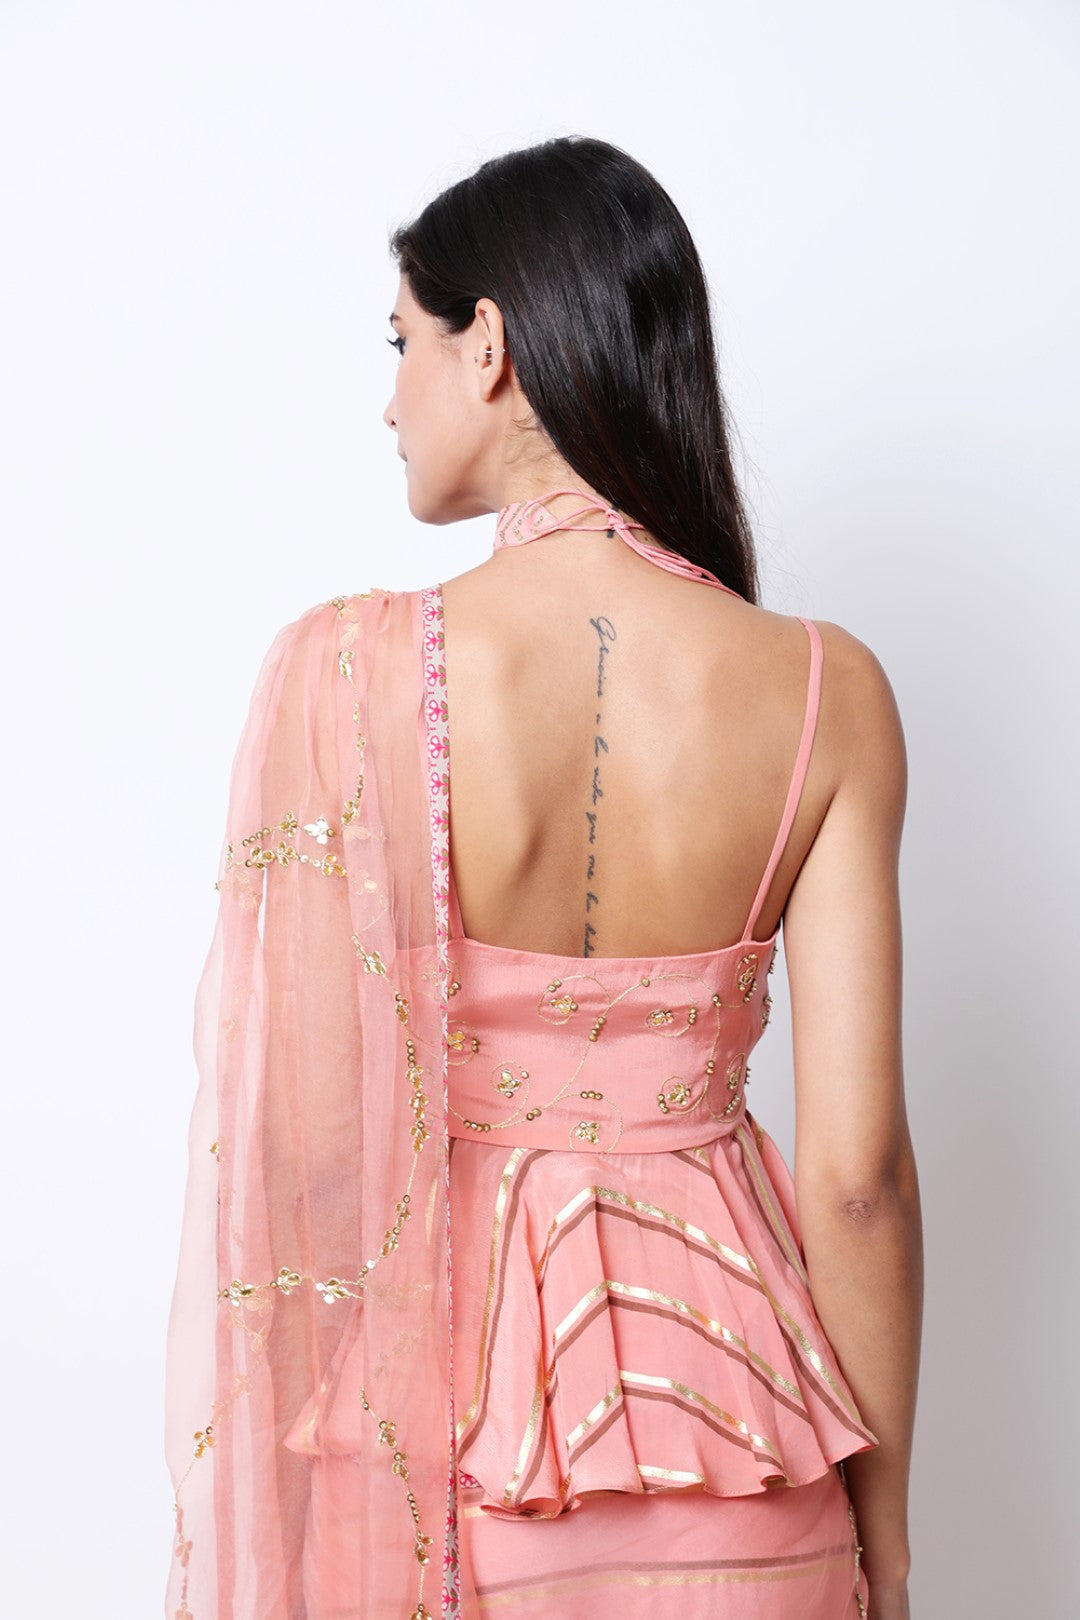 Vintage rose leheriya pre-pleated crepe saree with embroidered drape and peplum embroidered blouse.